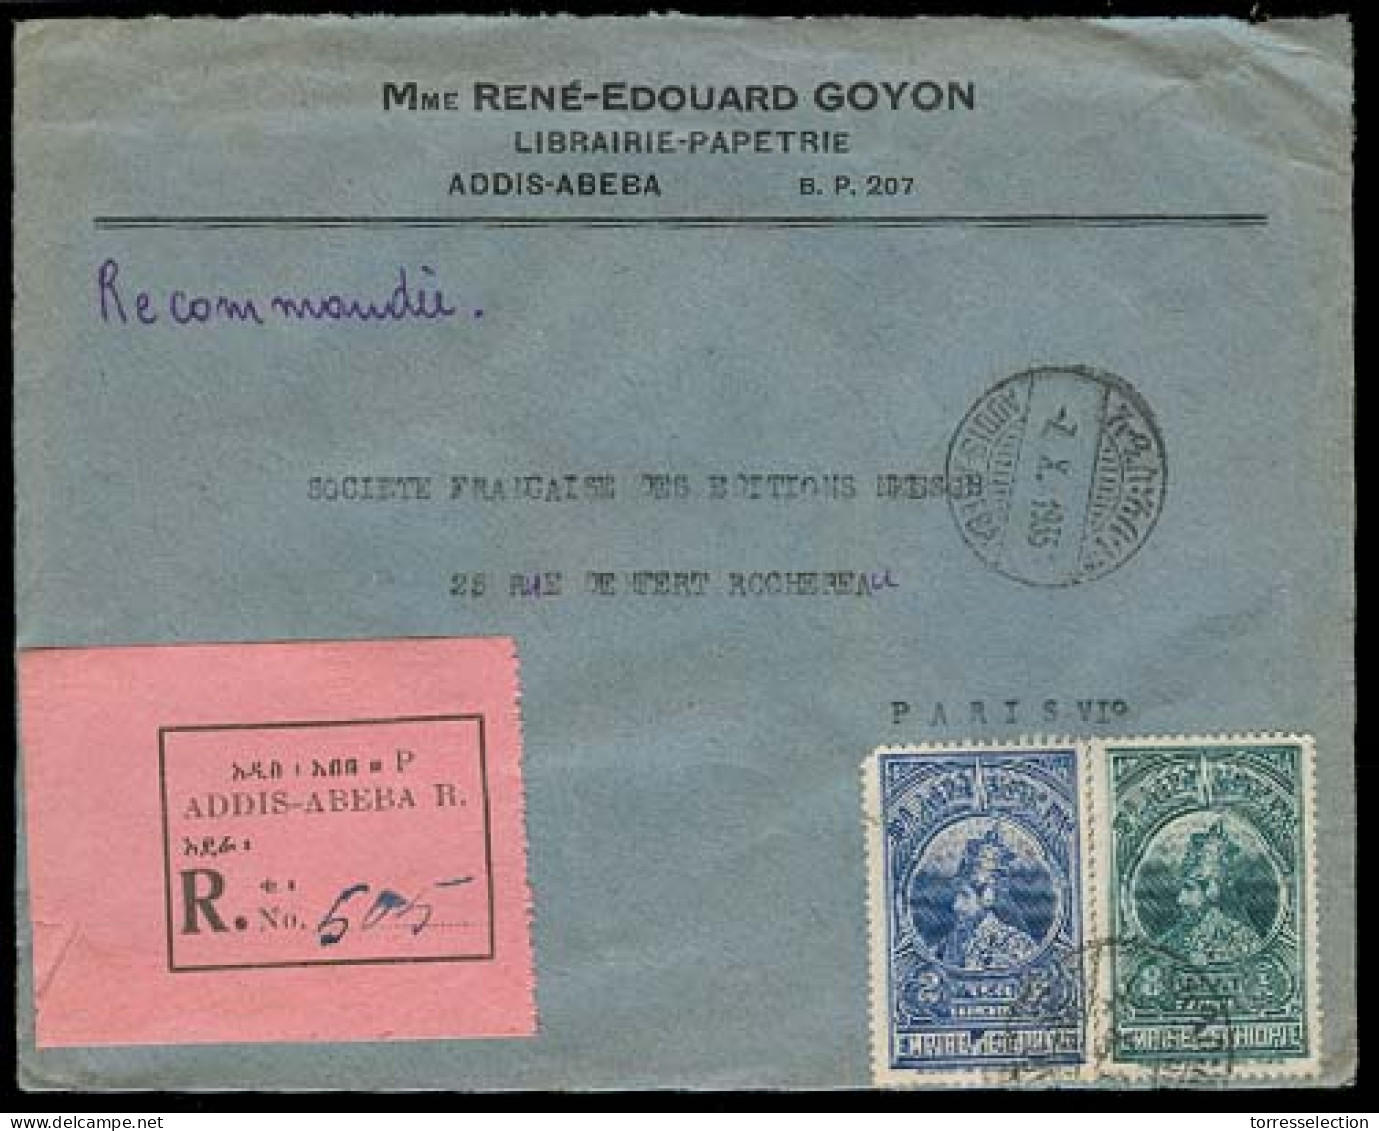 ETHIOPIA. 1935. Addis - Abeba - France. Reg Fkd Env / Pmk Label. VF. Arrival Cds. - Ethiopie